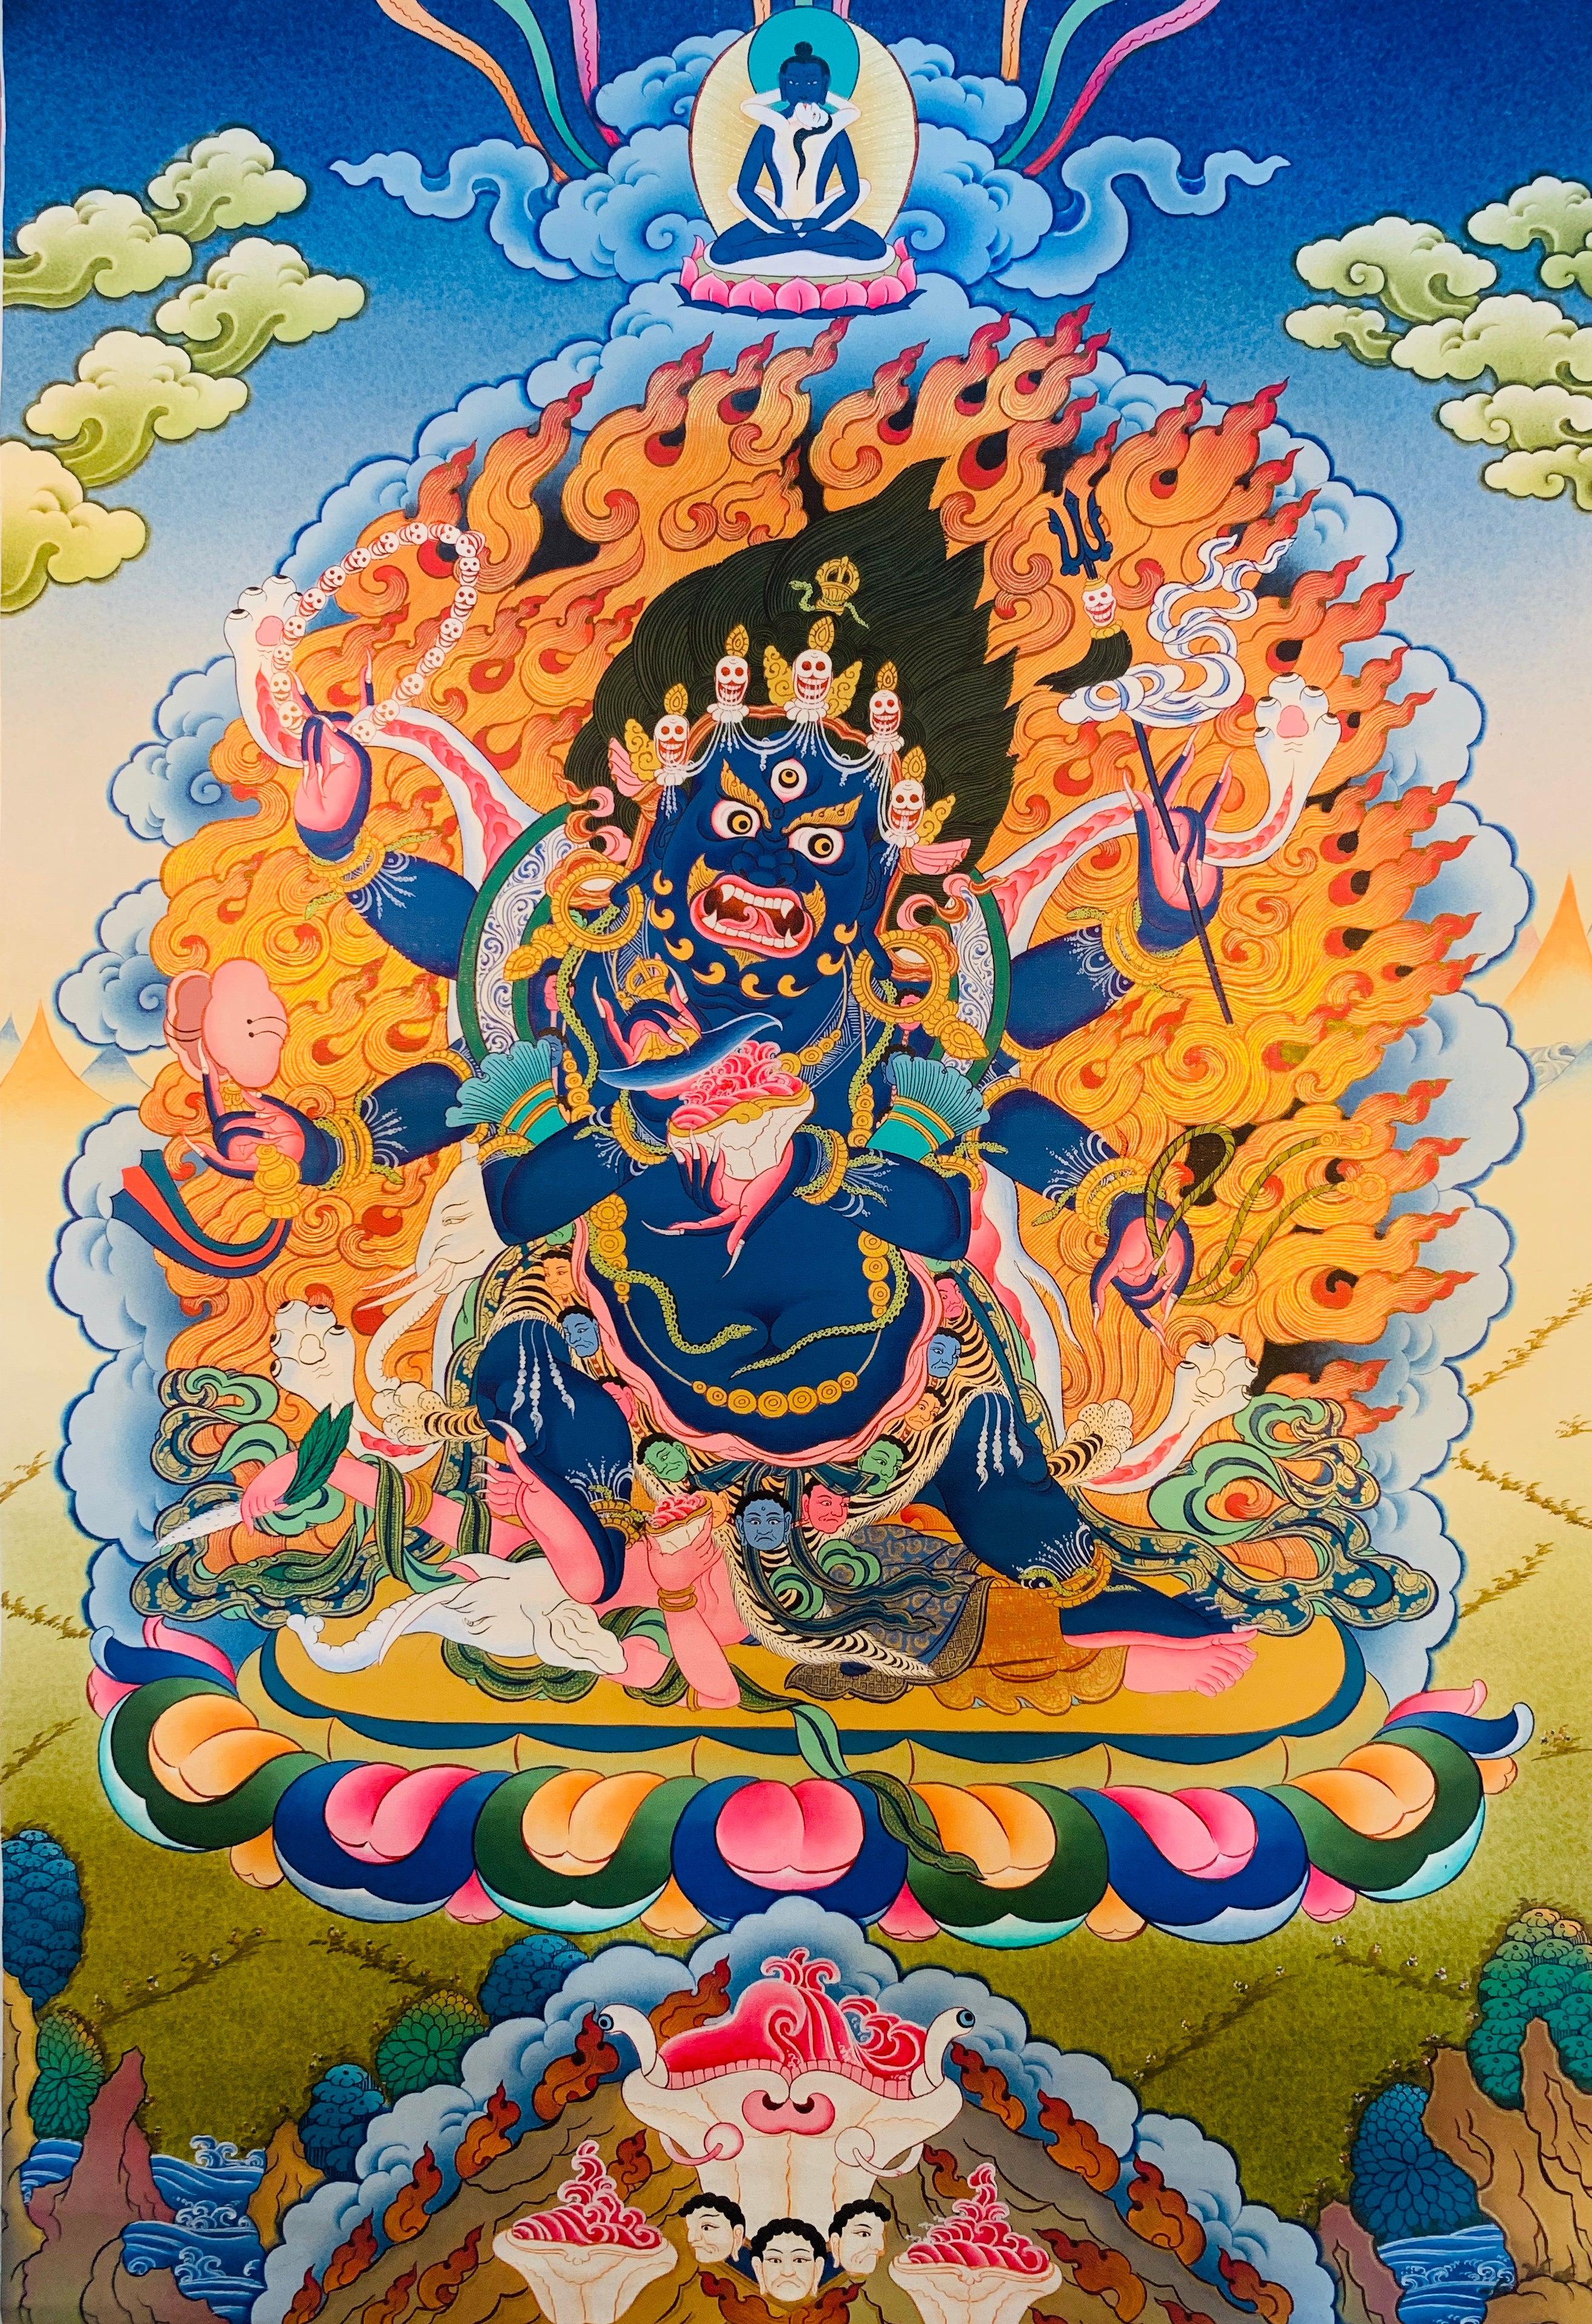 Wrathful Deity 6 Arms Mahakala Thangka Painting 70*50 - The Thangka